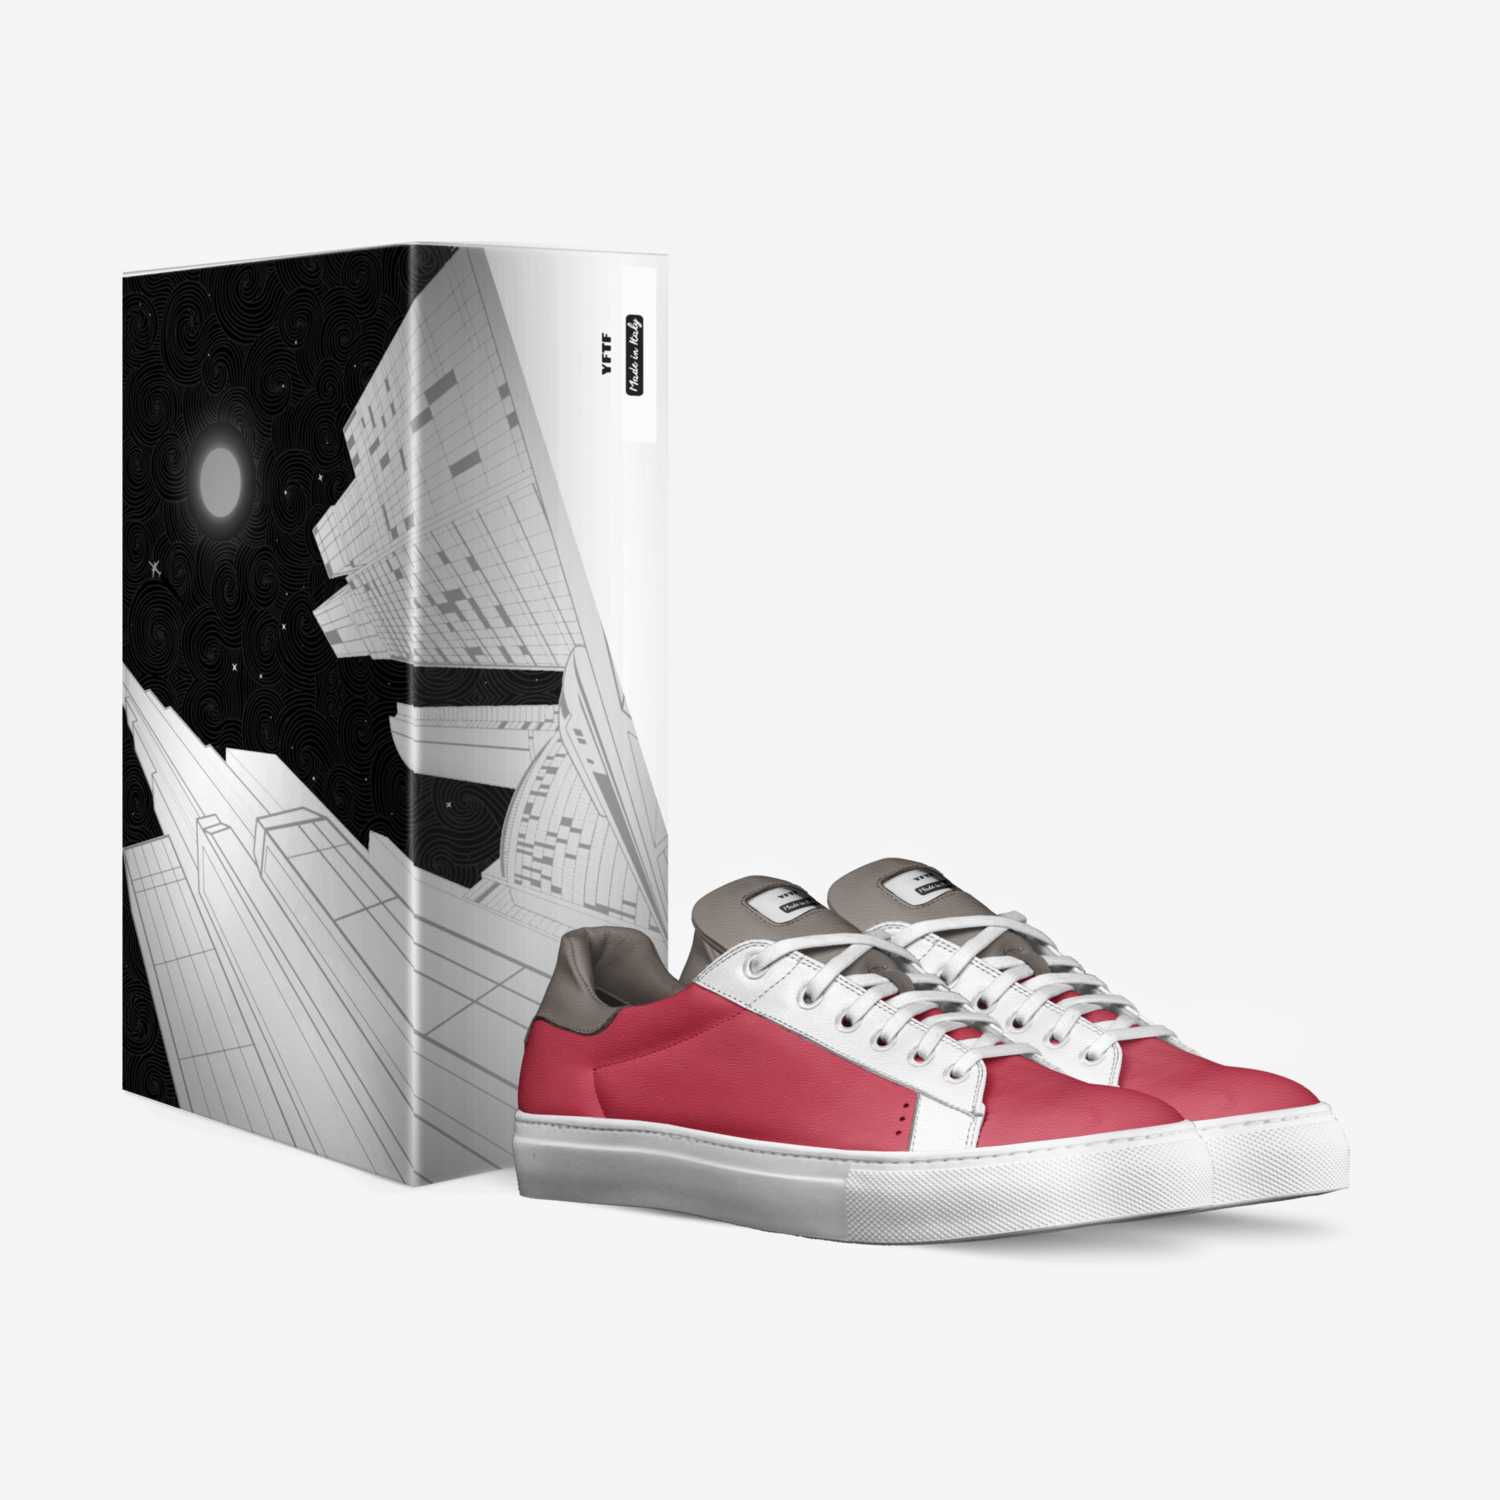 YFTF custom made in Italy shoes by Eduardo Martinez | Box view